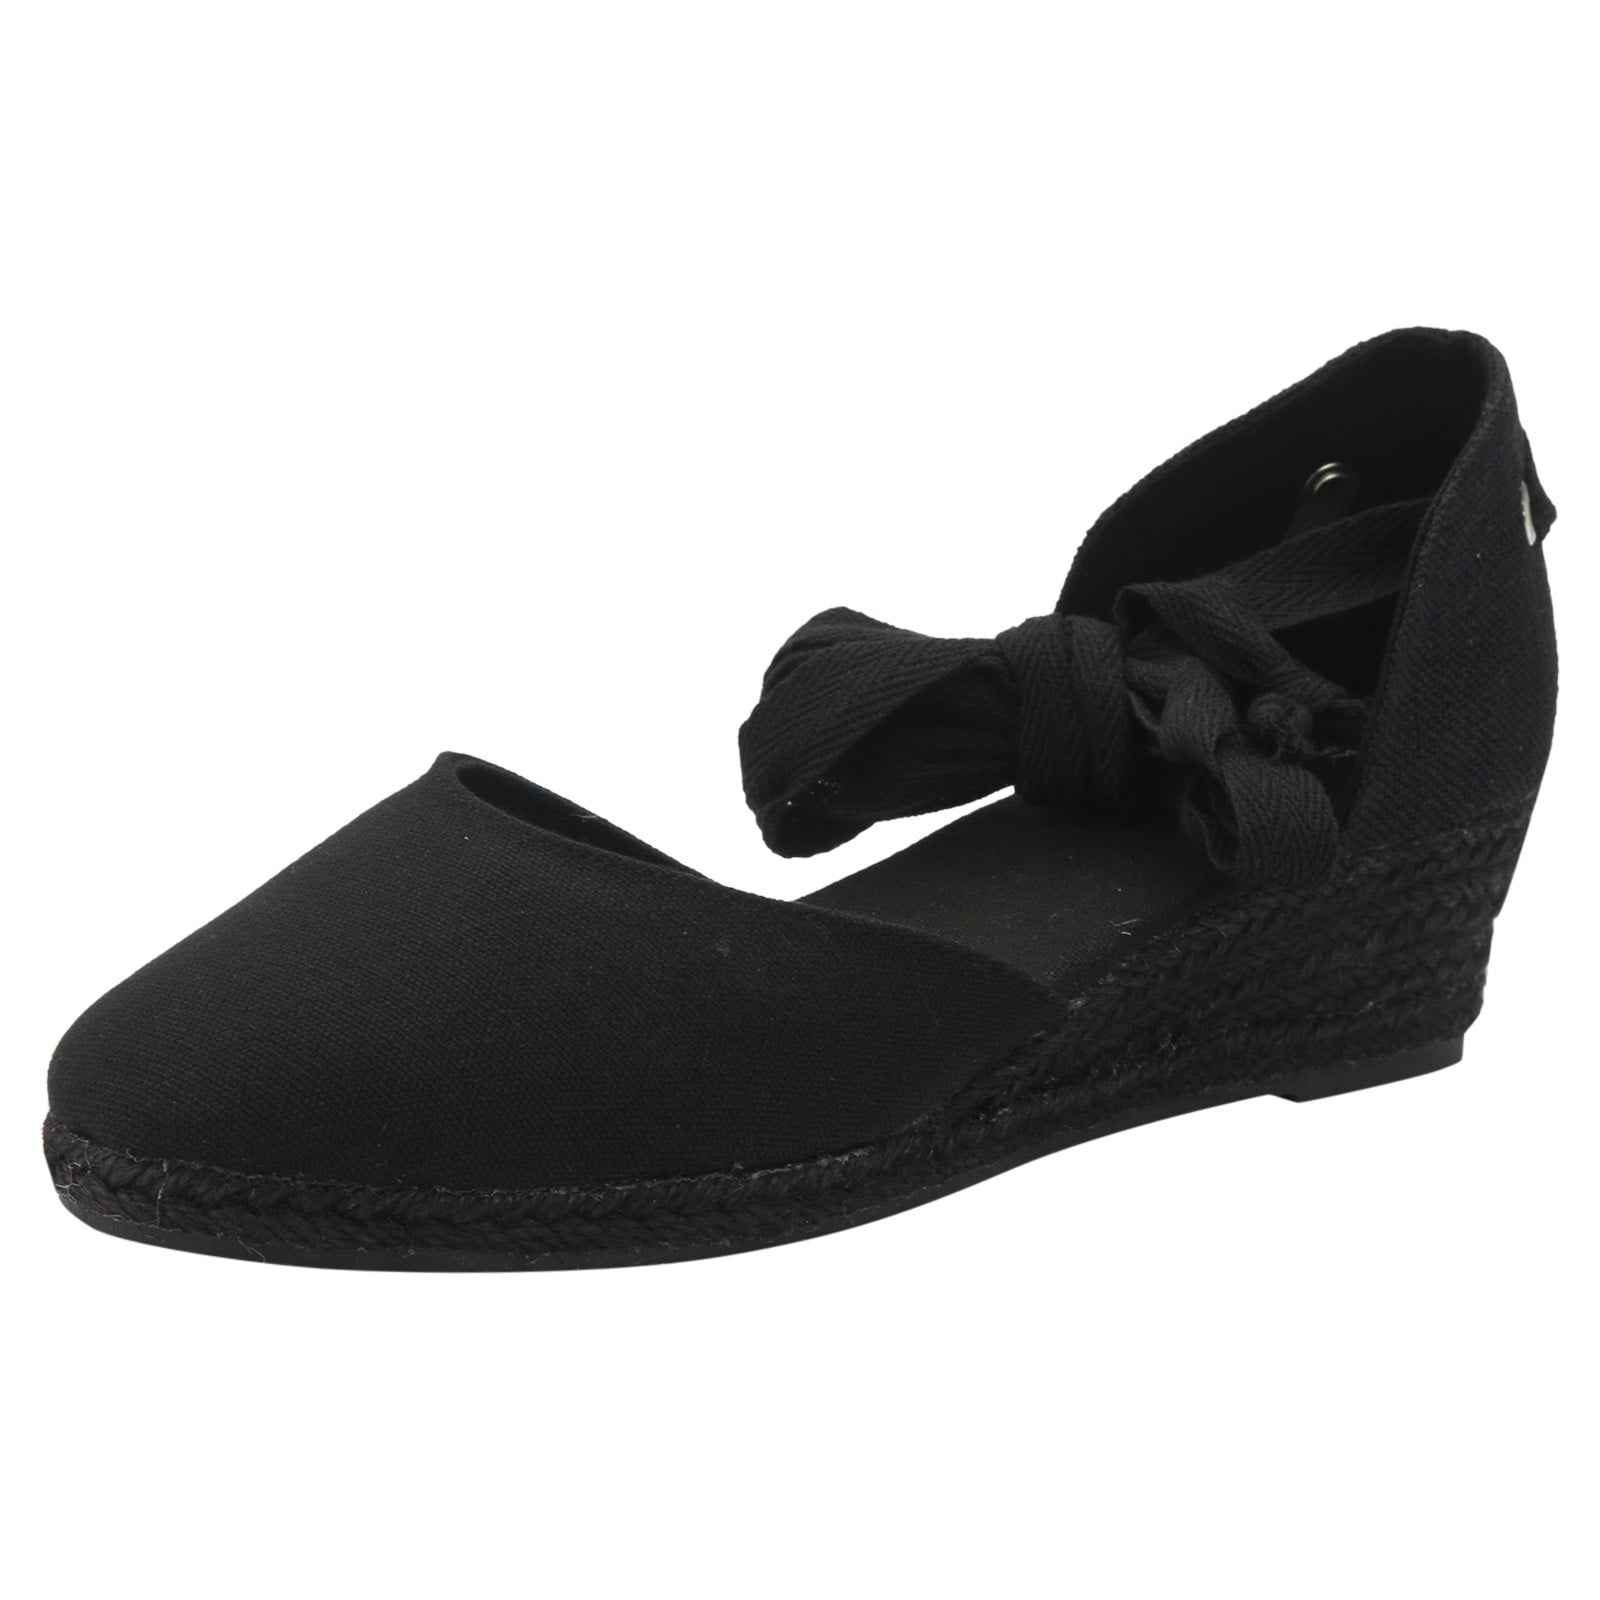 WILLBEST Sandals Women Comfortable Women Shoes Fashionable Wedge ...